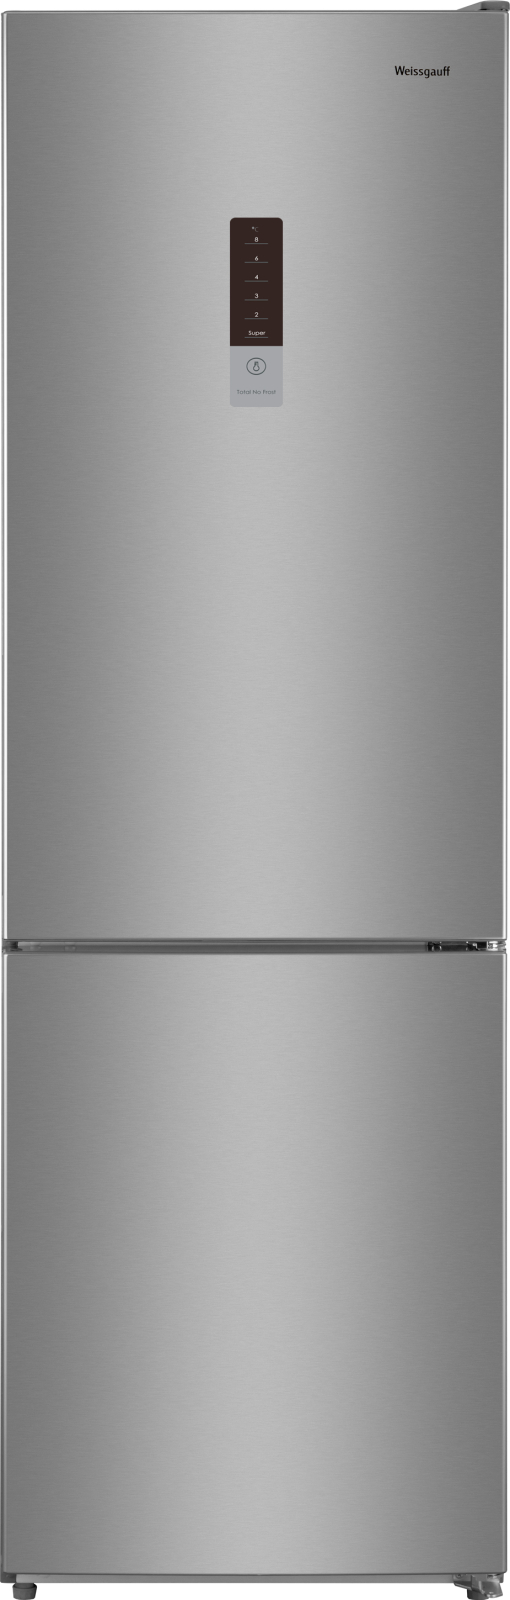 Холодильник Weissgauff WRK 190 DX серебристый холодильник weissgauff wsbs 600 x серебристый